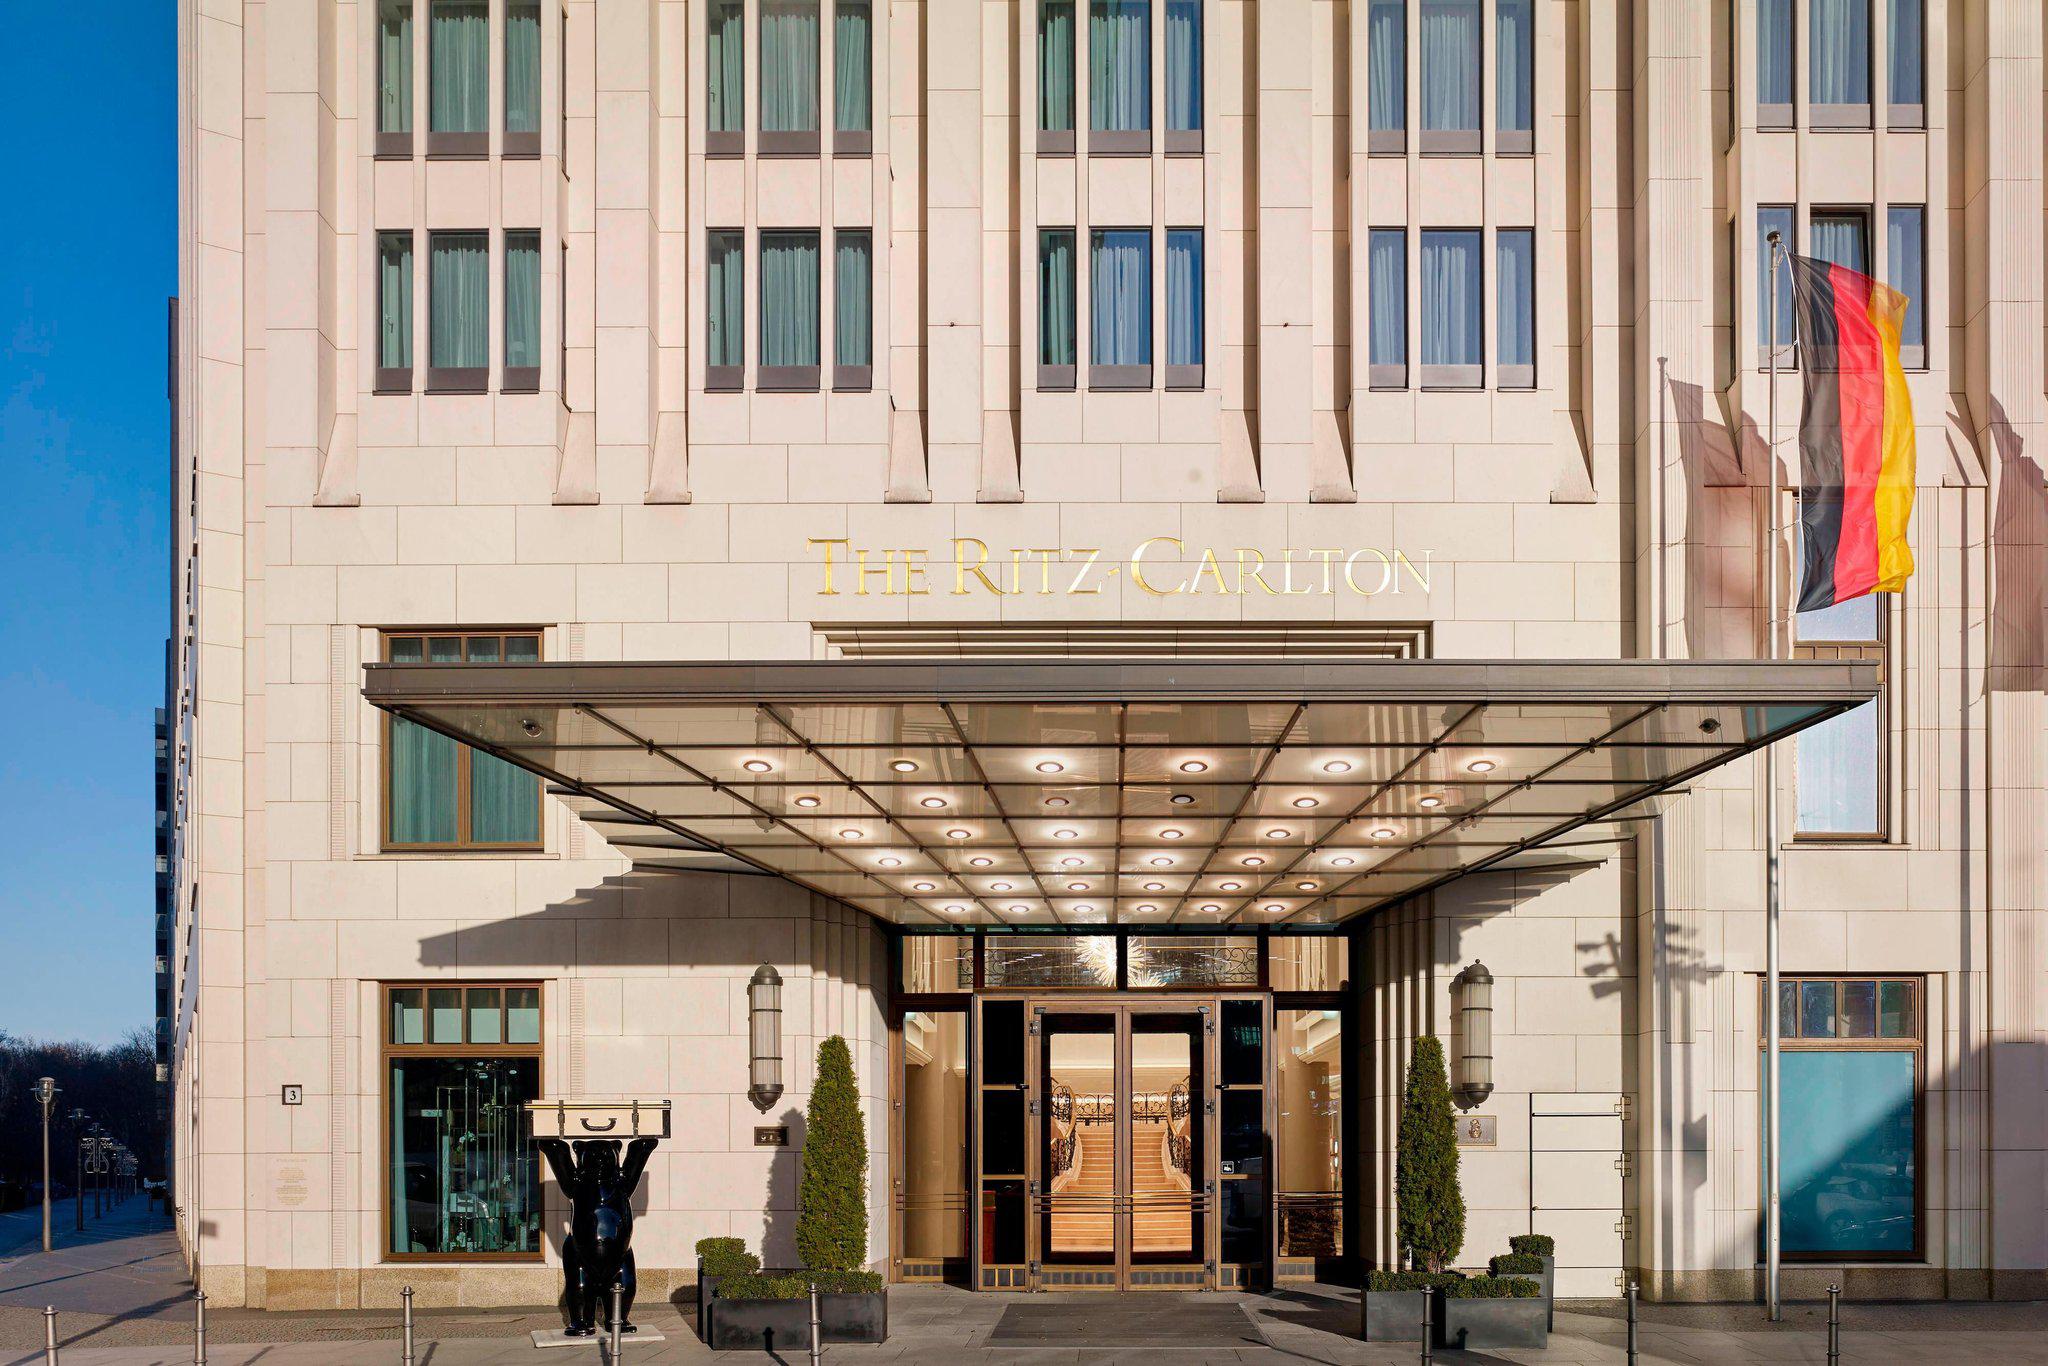 The Ritz-Carlton, Berlin, Potsdamer Platz 3 in Berlin